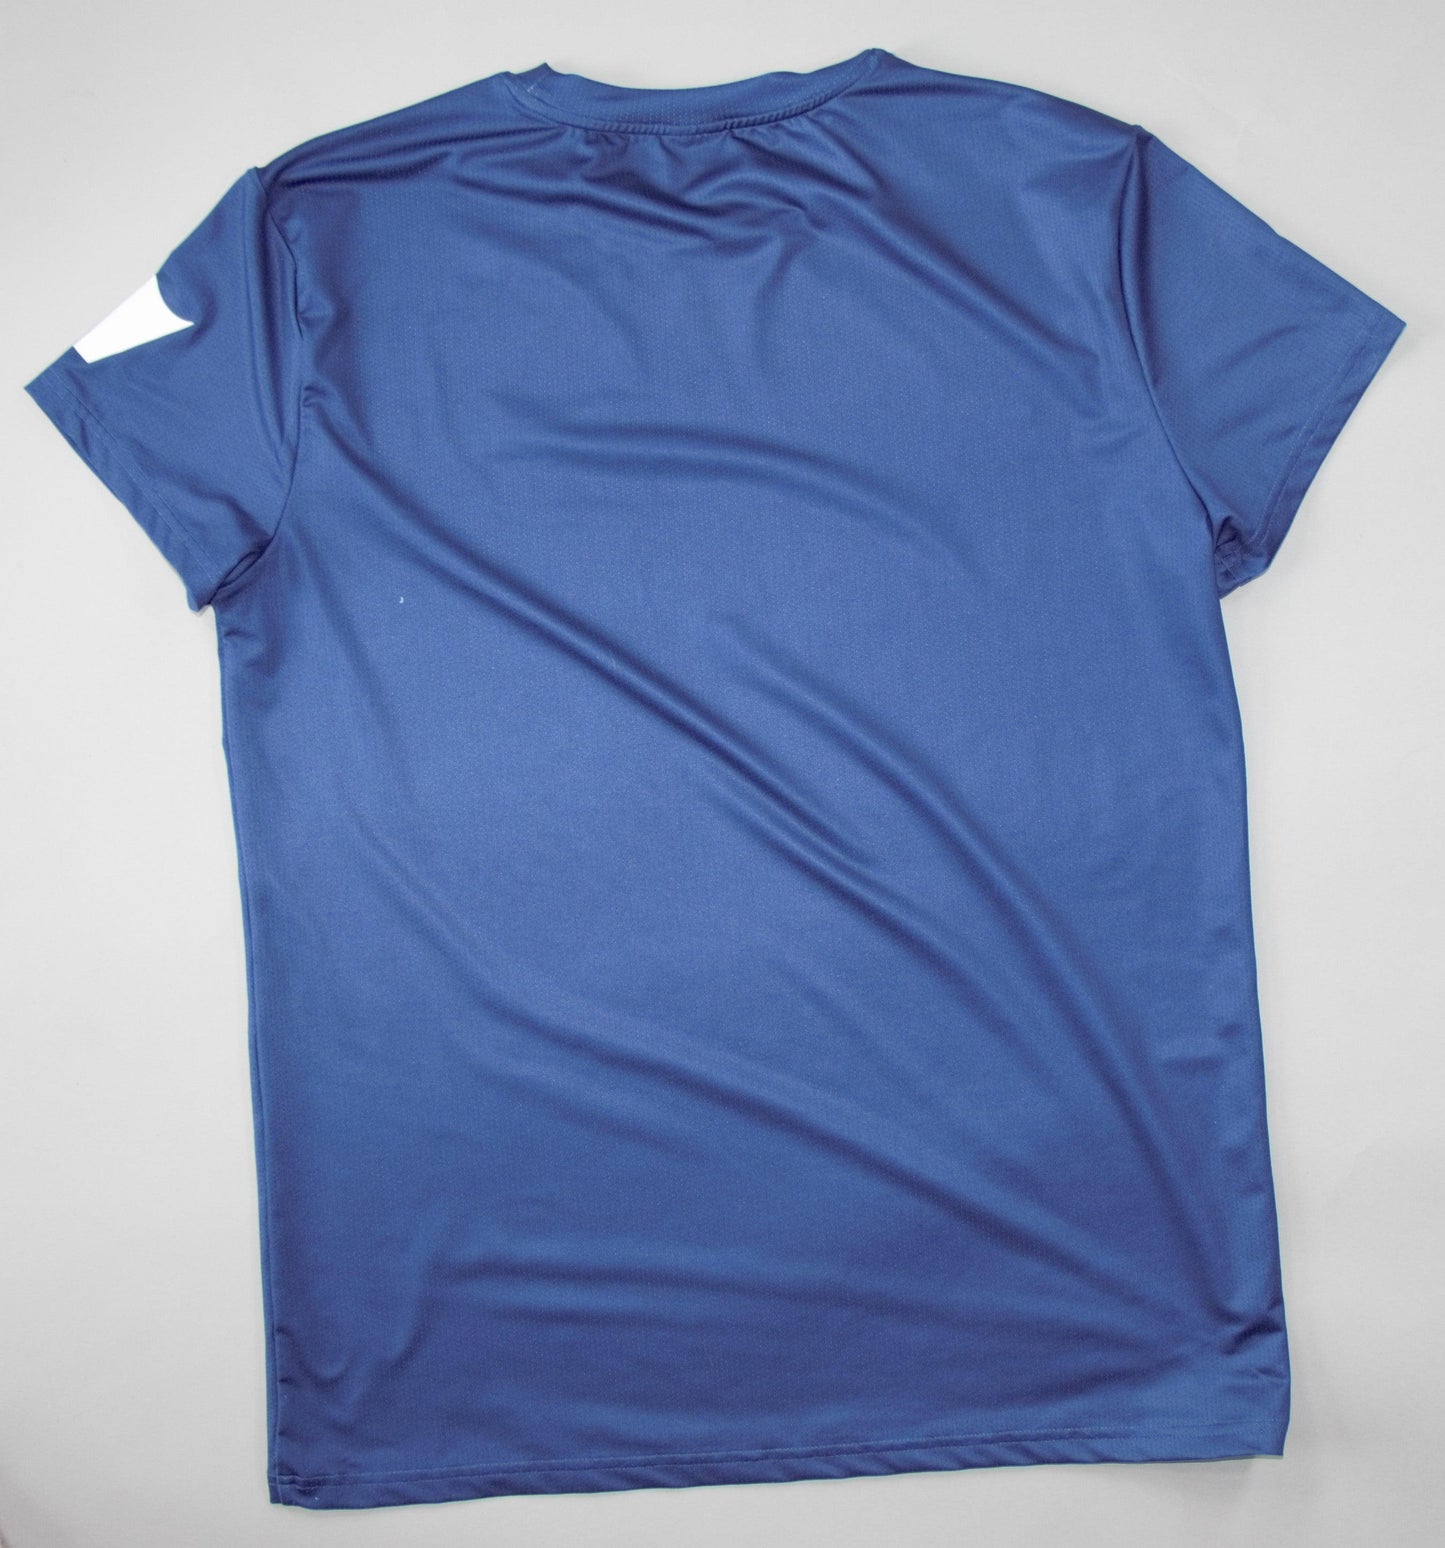 Fitted Shirt Blue - builtwear